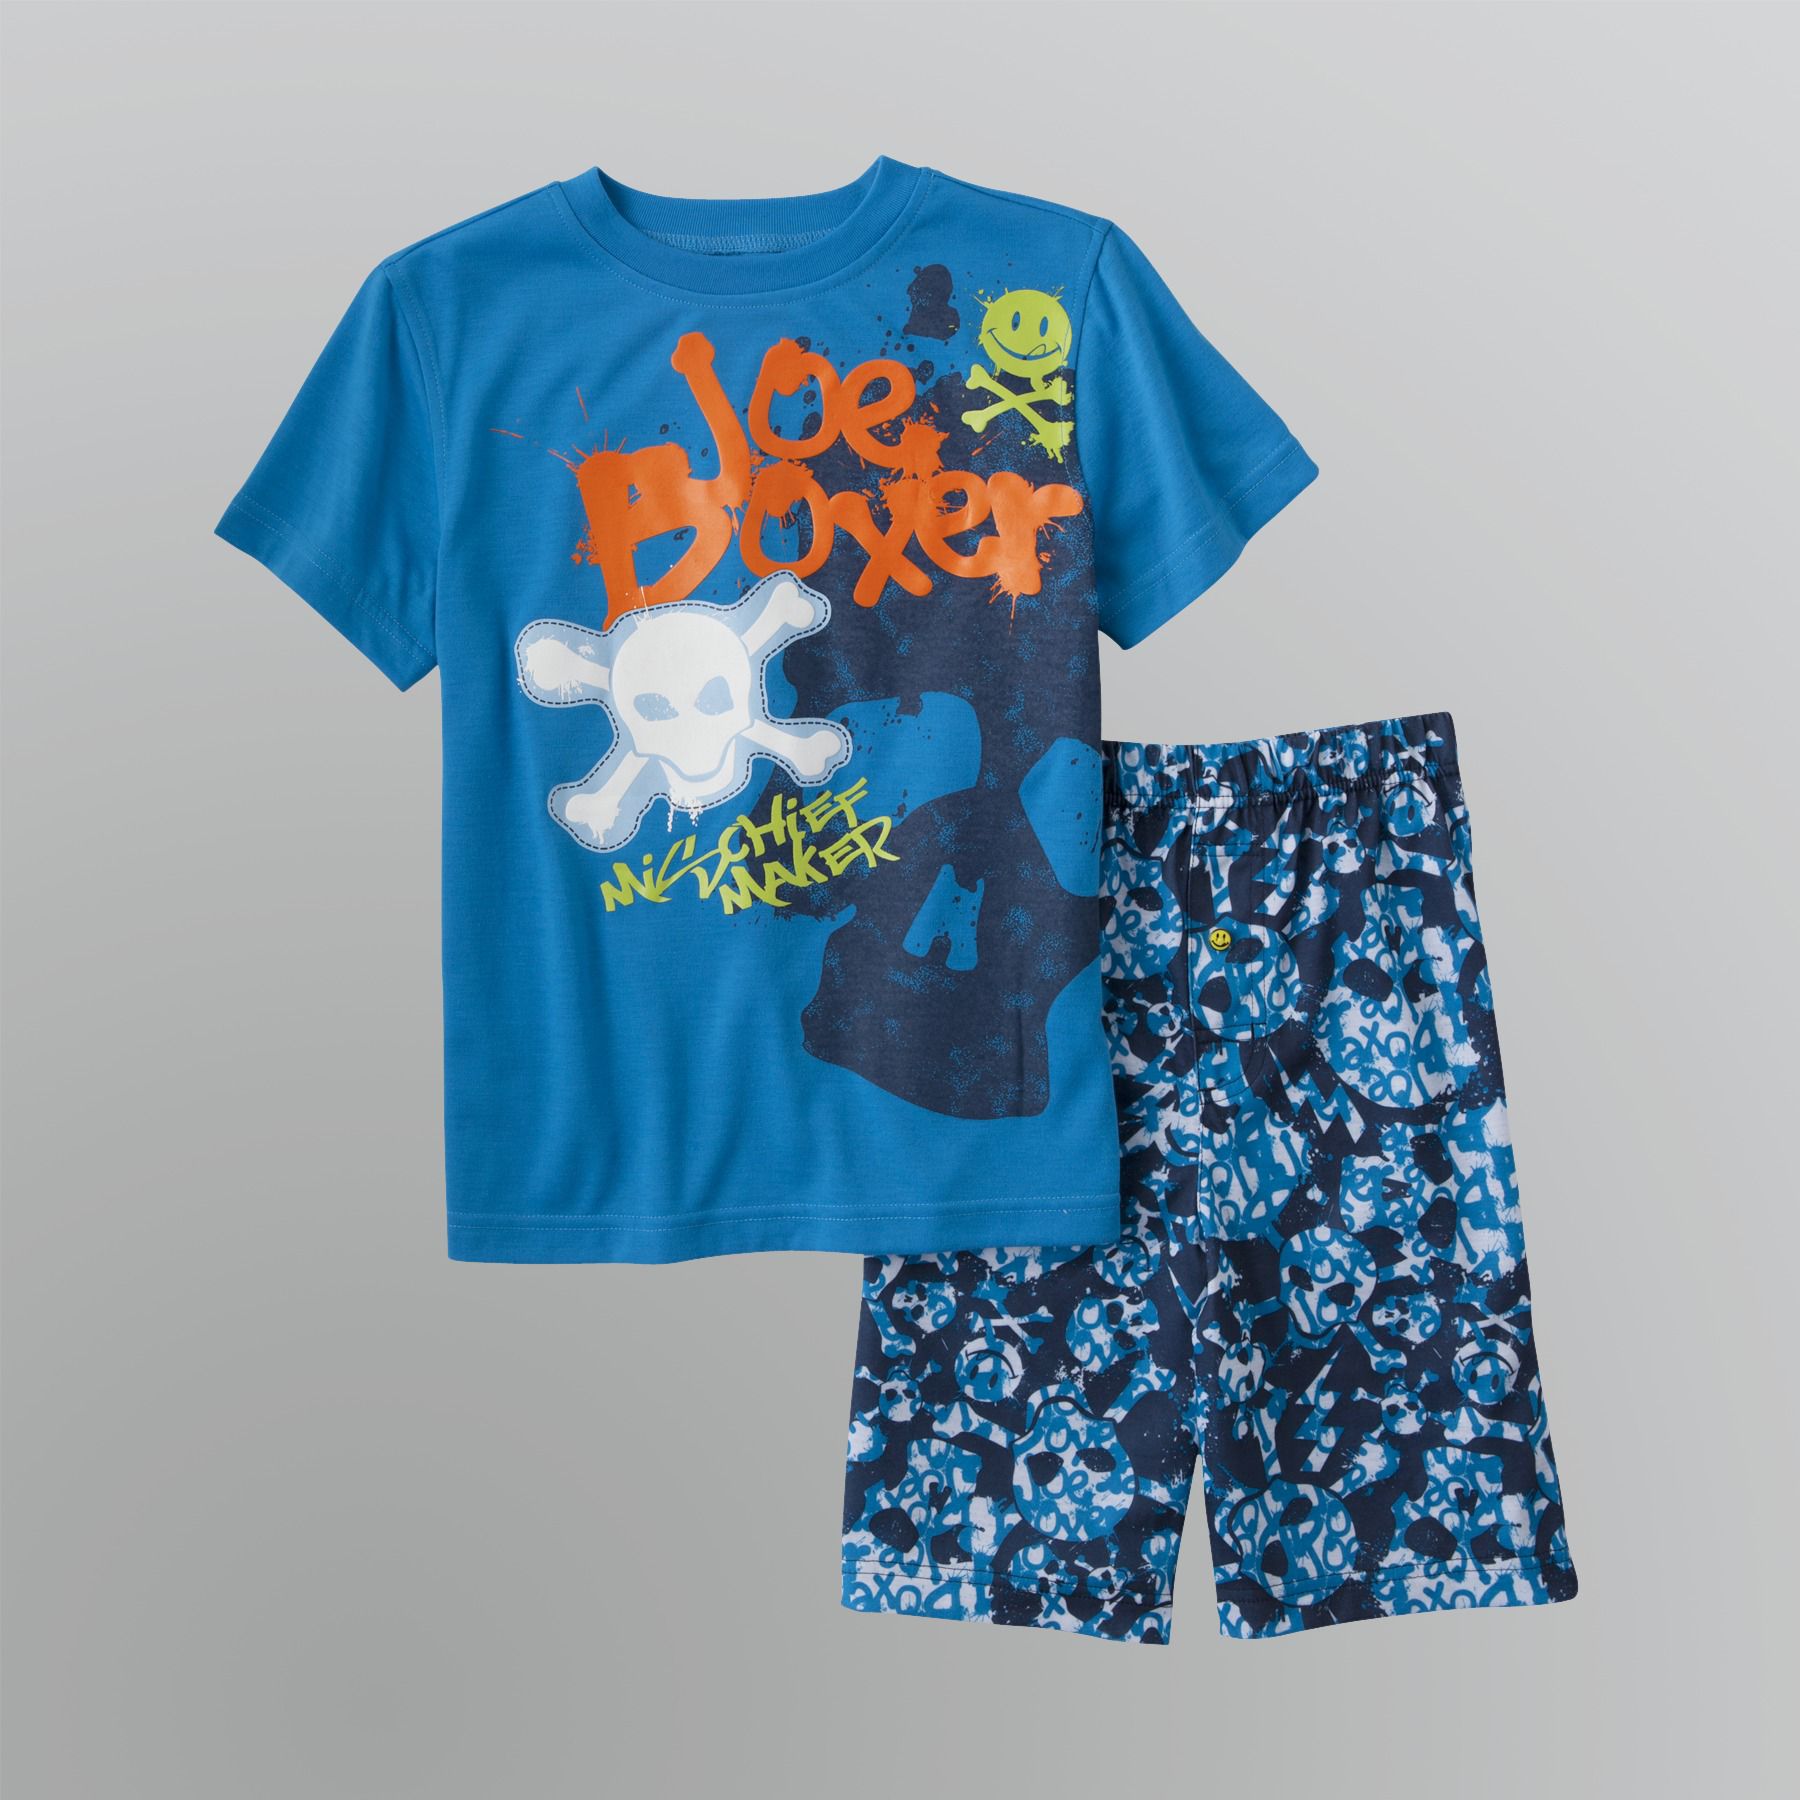 Joe Boxer Boy's Mischief Maker Pajamas Set